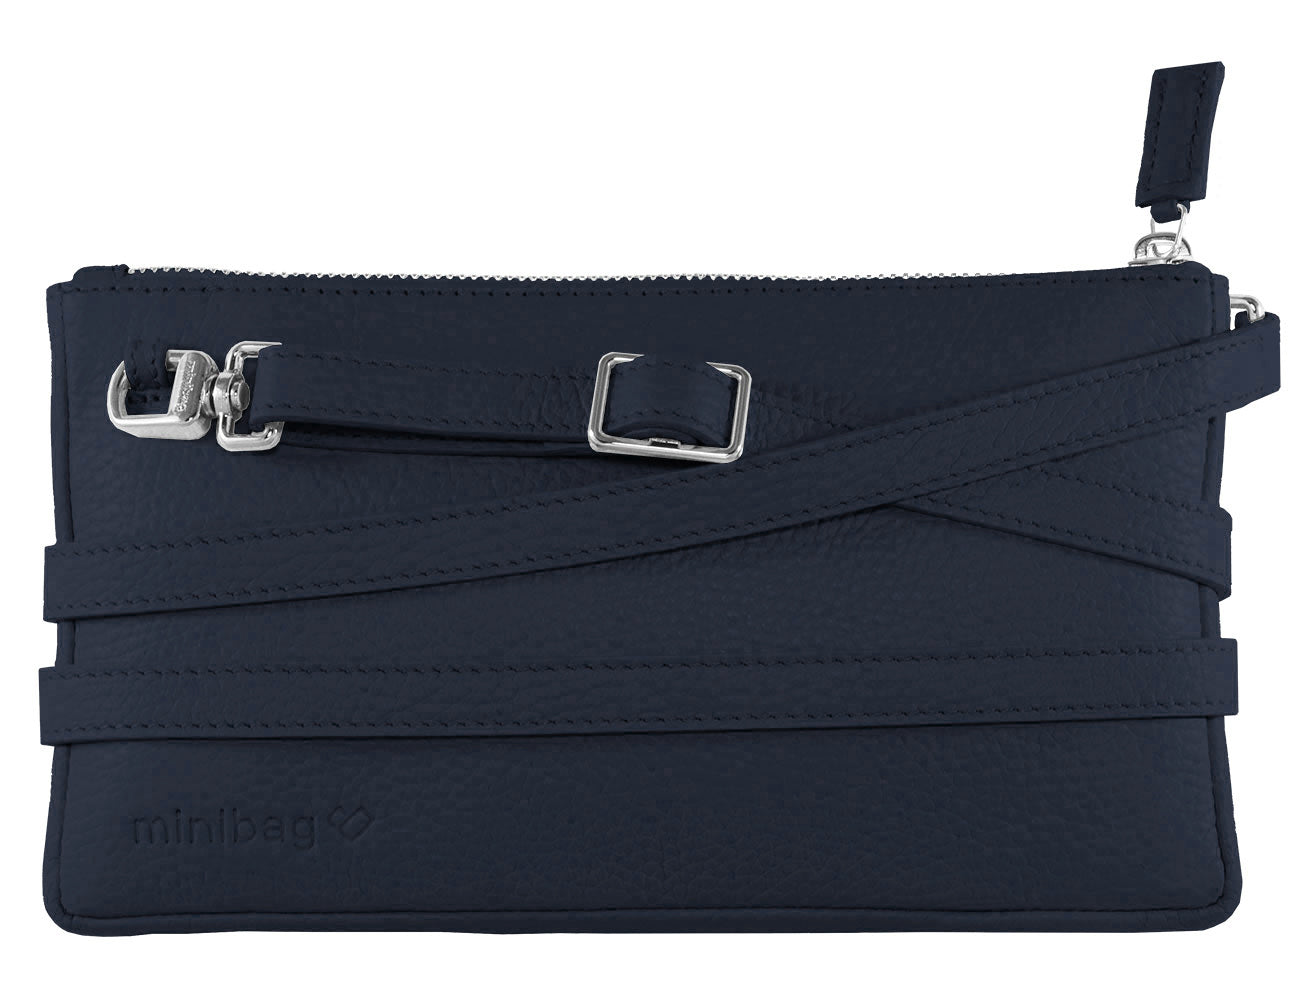 minibag navy, Ledertasche dunkelblau, Clutch dunkelblau, minibag dunkelblau, Geldtasche zum Umhängen